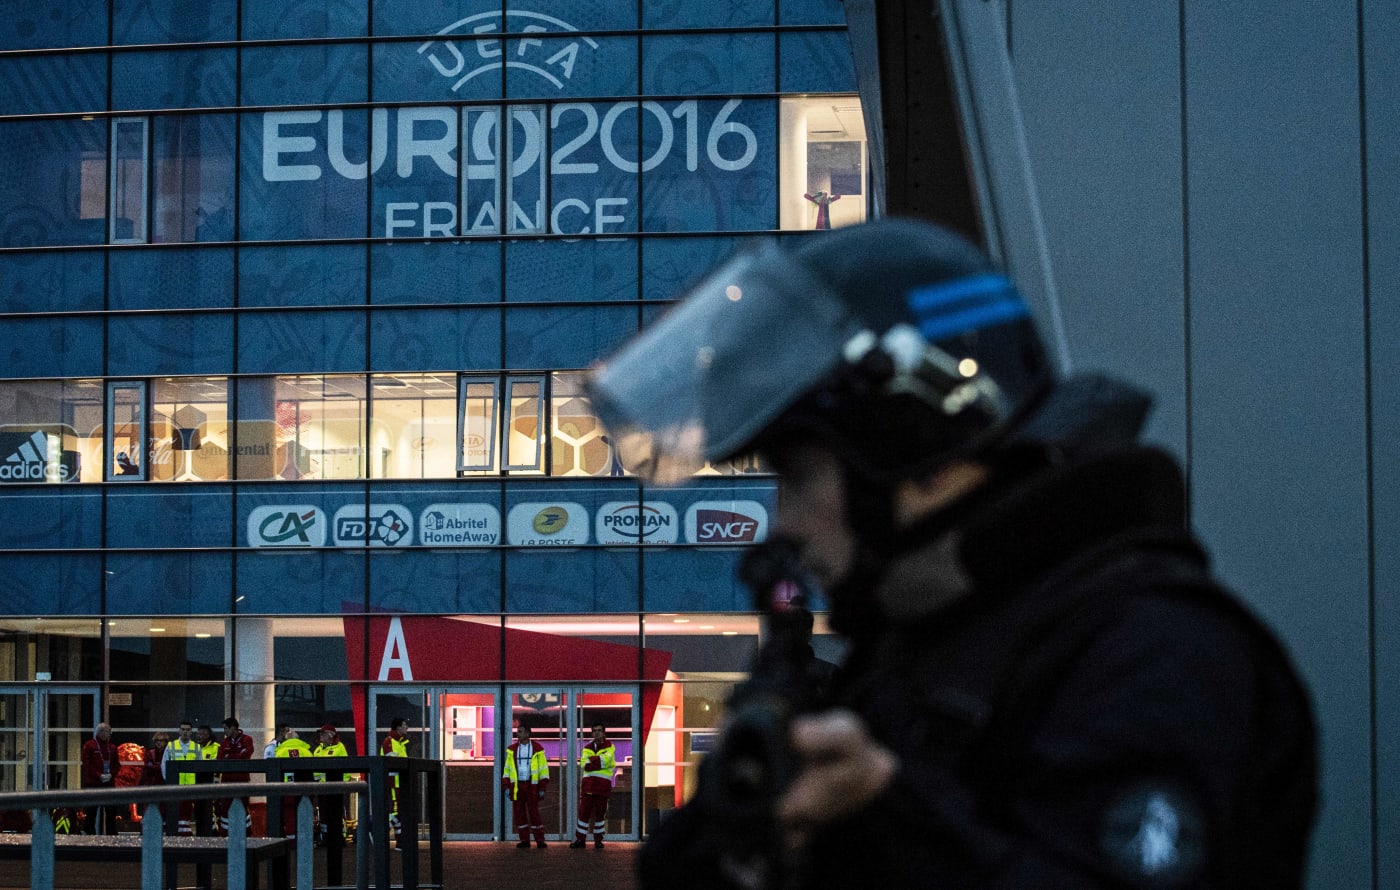 France releases terror alert app in time for Euro 2016